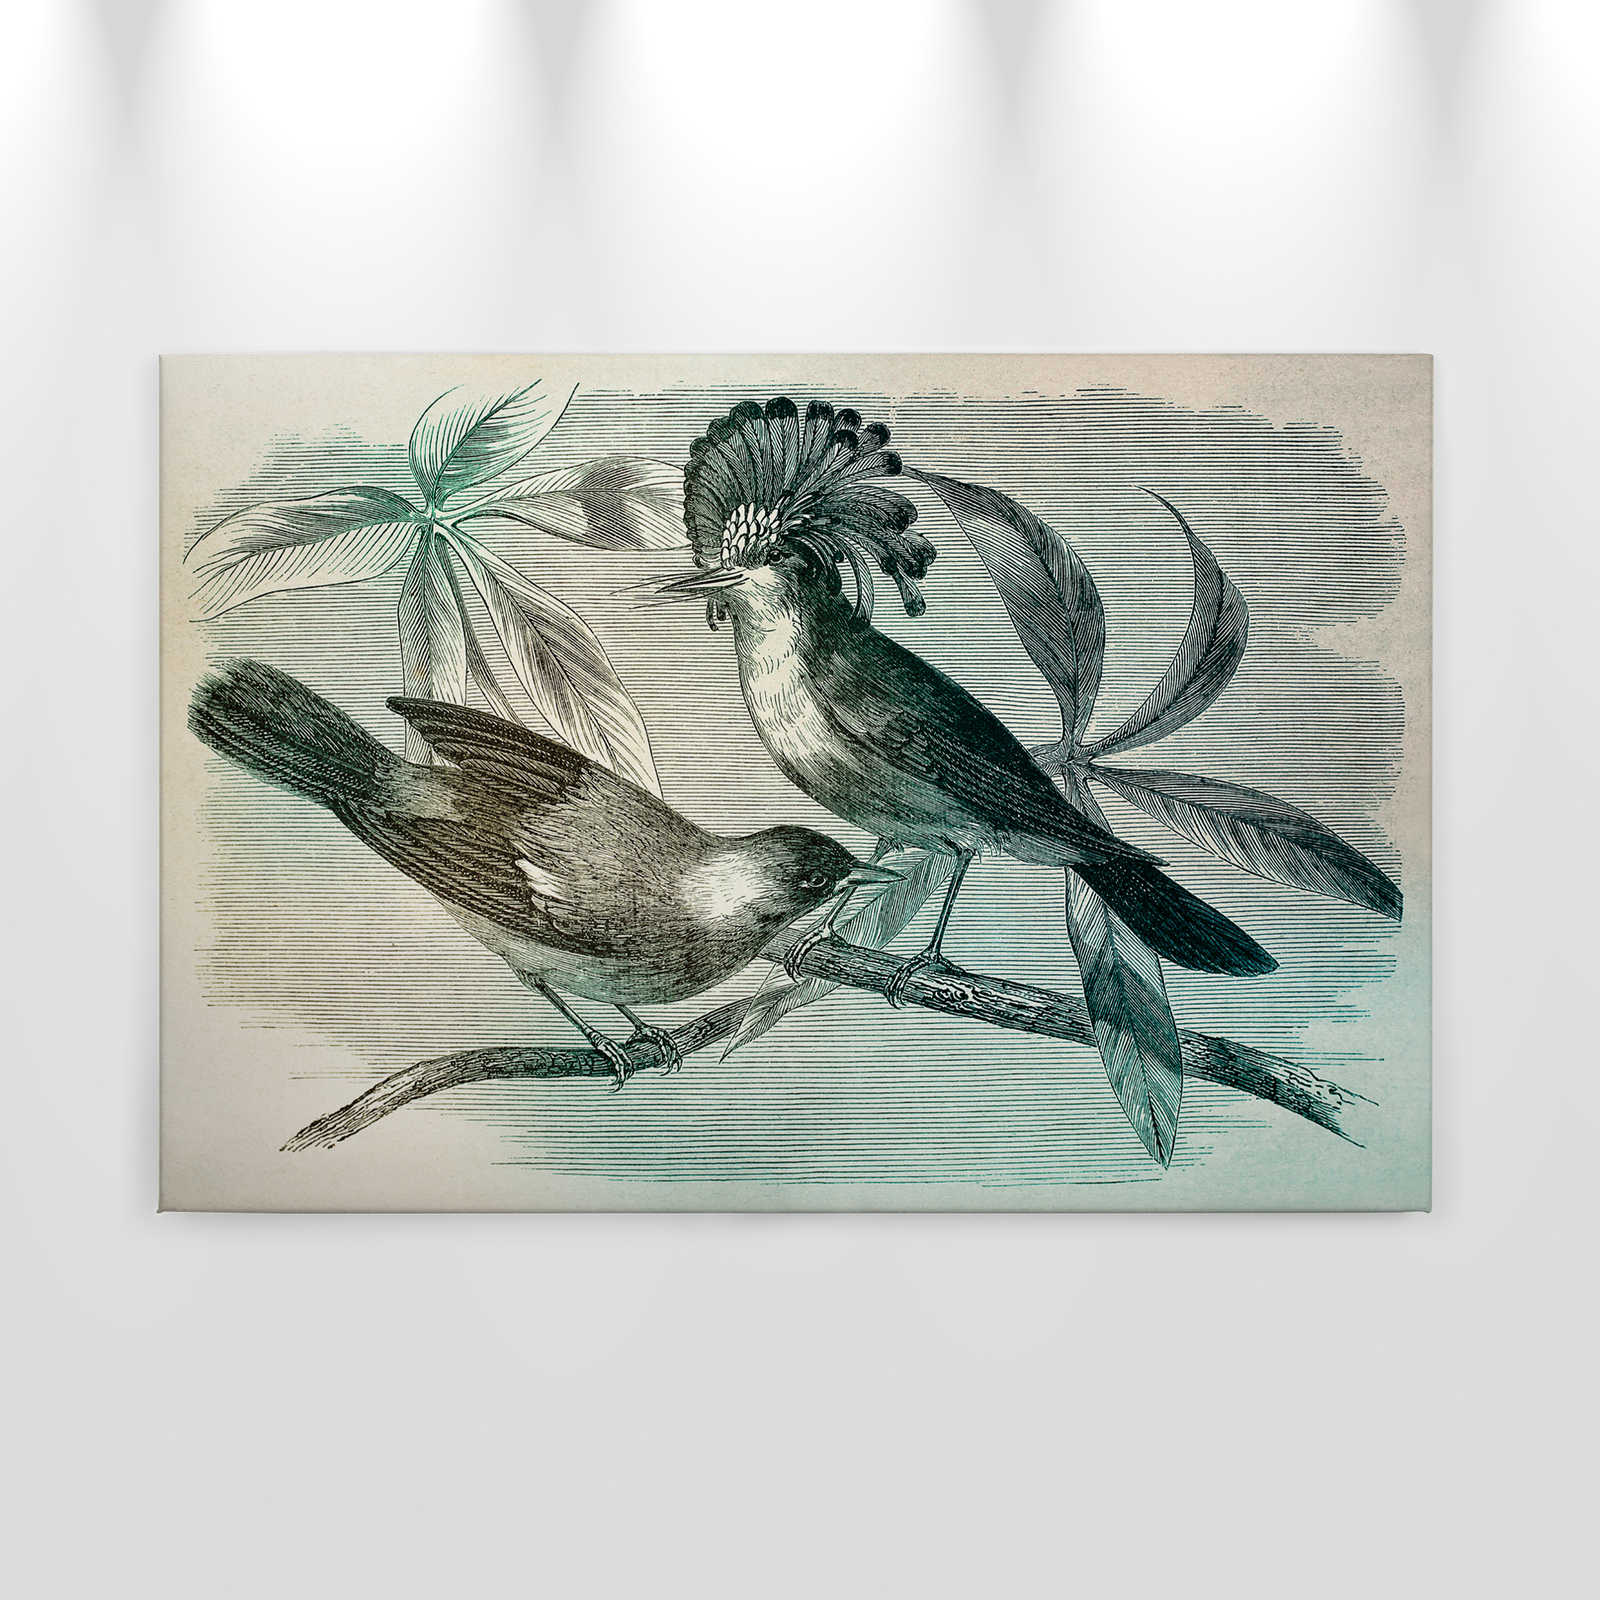             Tela dipinta con motivi di uccelli in stile retrò - 0,90 m x 0,60 m
        